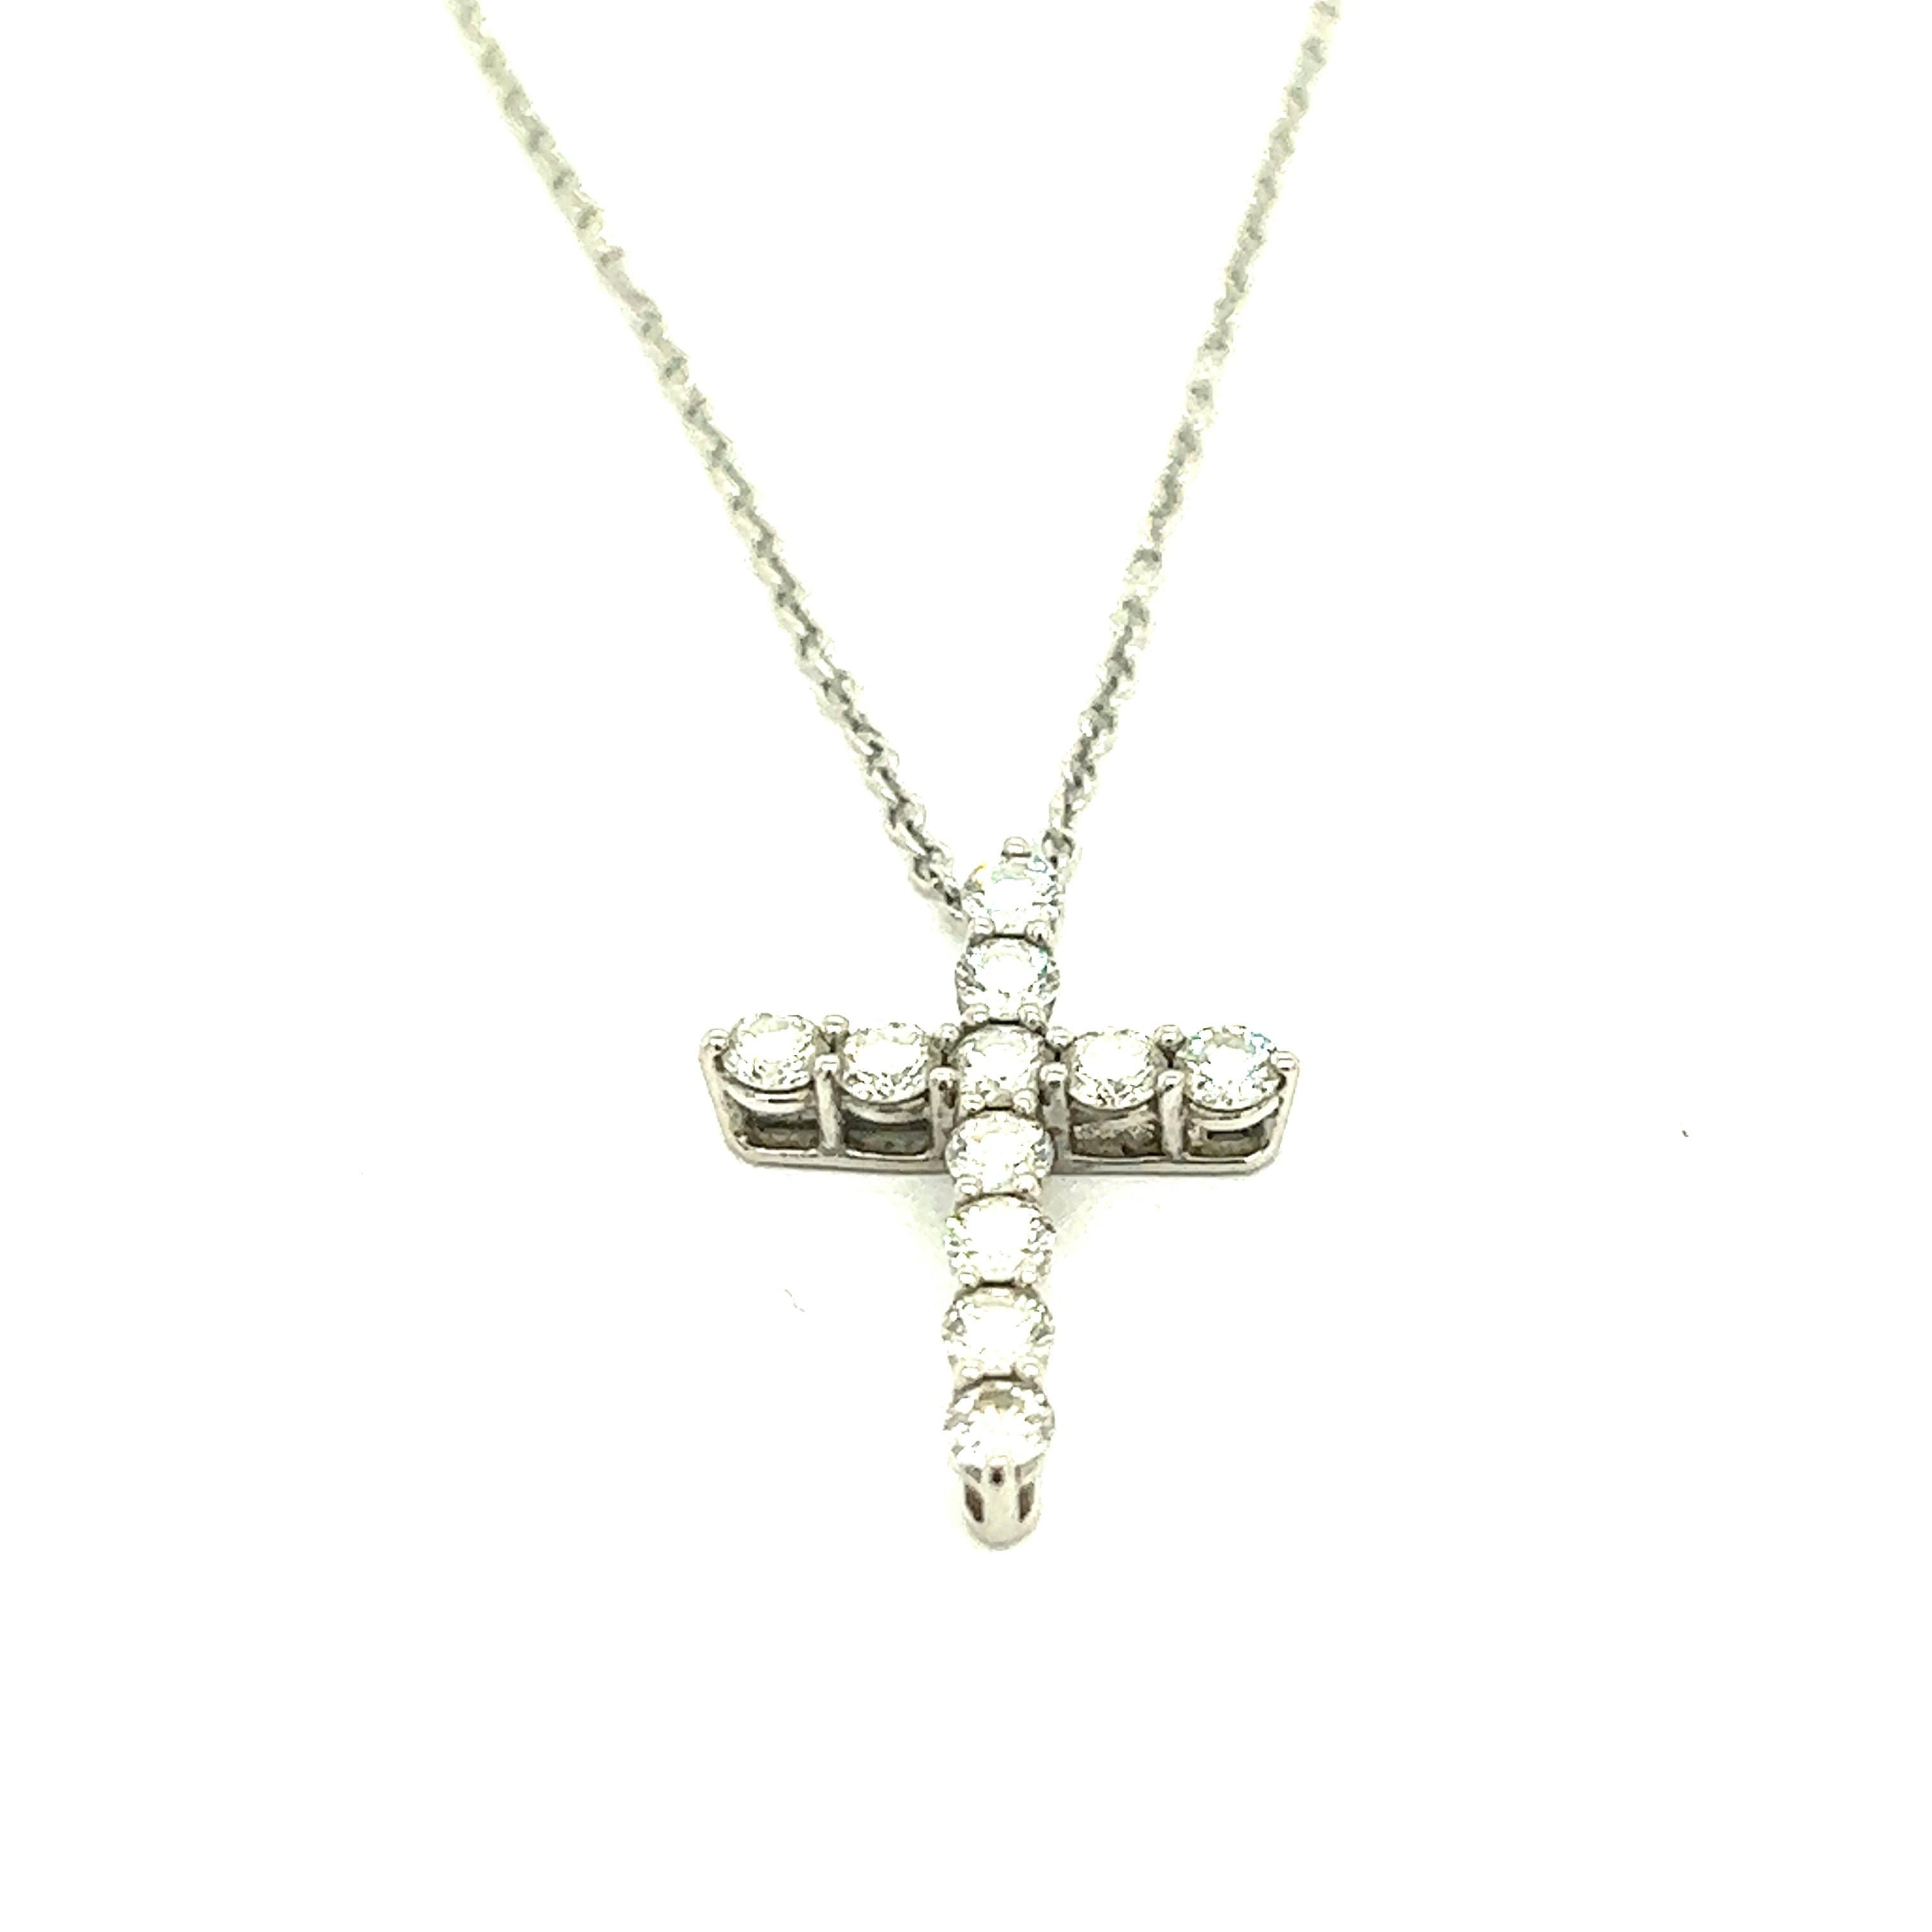 Tiffany & Co. Diamond Platinum Cross Pendant Necklace

Eleven round-cut diamonds, set on platinum, featuring a cross motif; marked Tiffany & Co., PT950 (pendant); Tiffany & Co., PT 950 (chain)

Size: Pendant width 1.2 cm, length 1.7 cm; Chain length